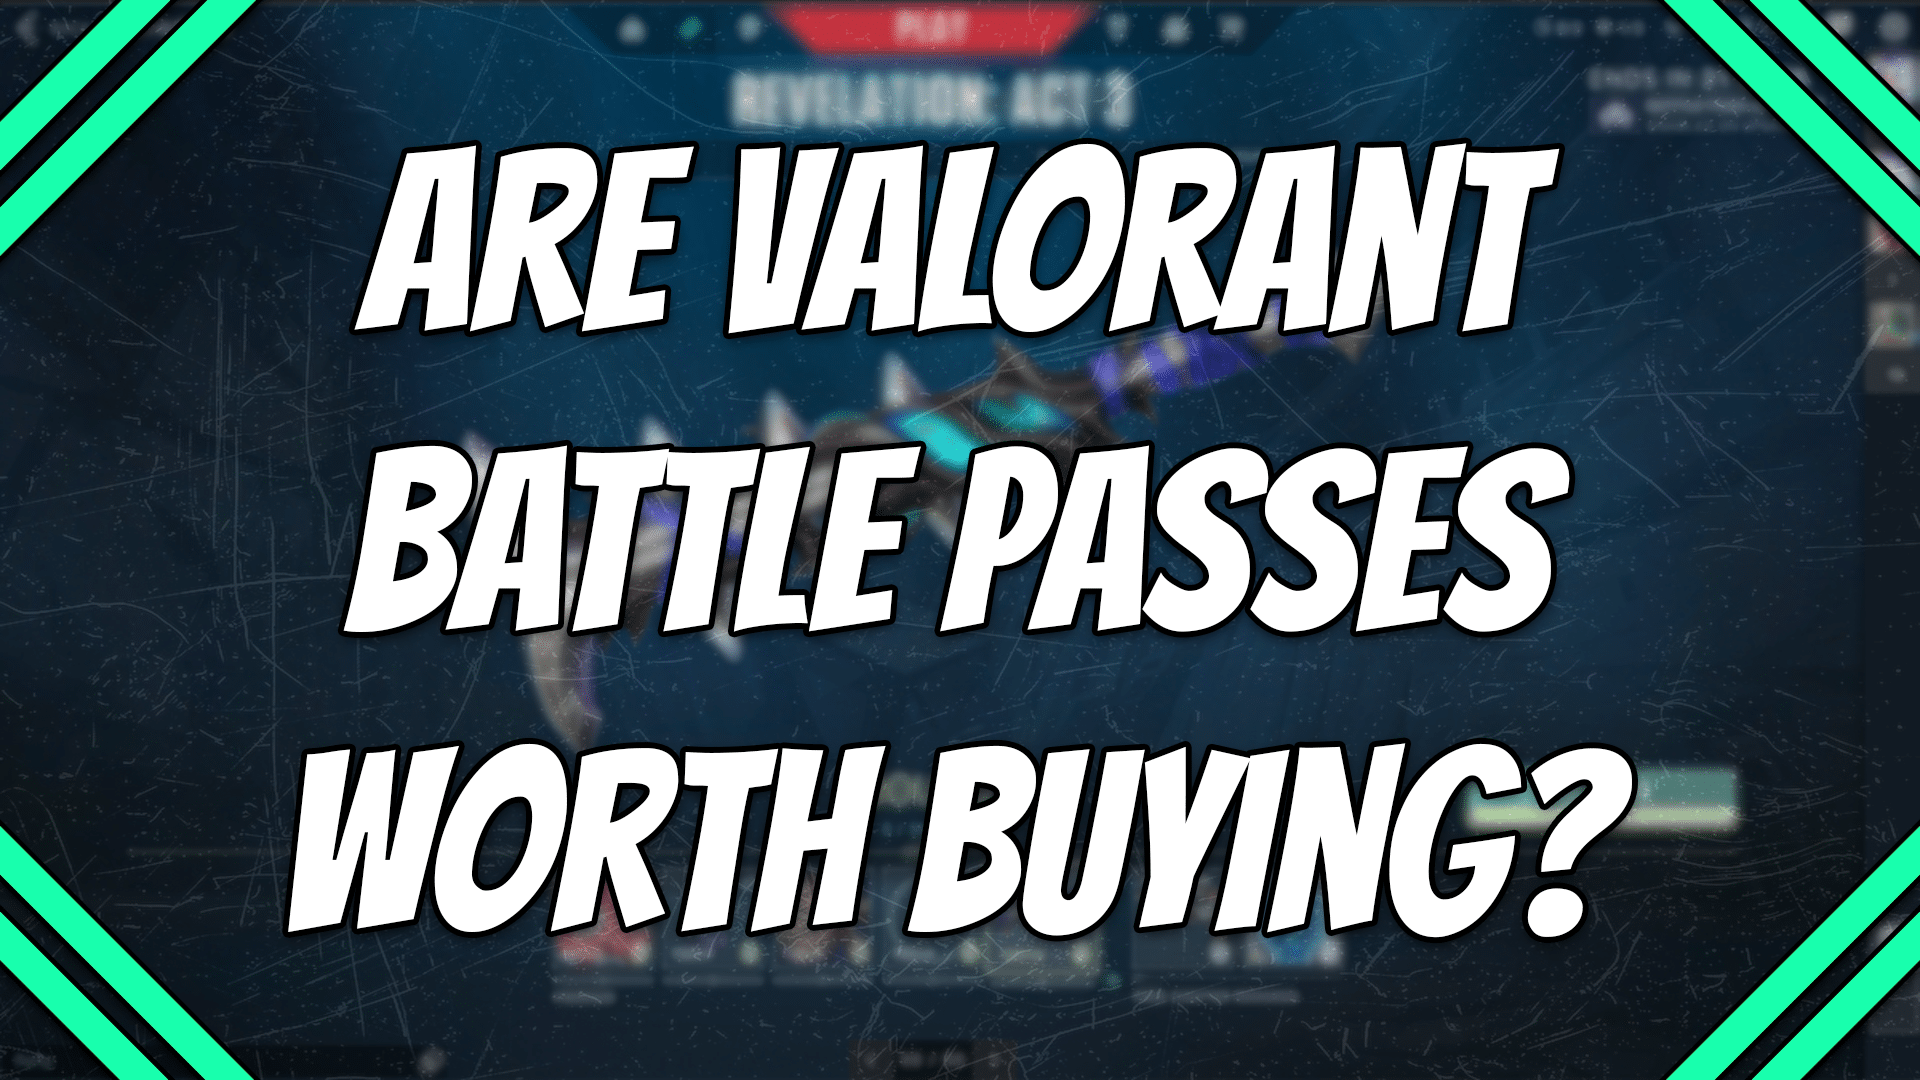 Total Battle - FREE Valor points bonus! (y), share and get